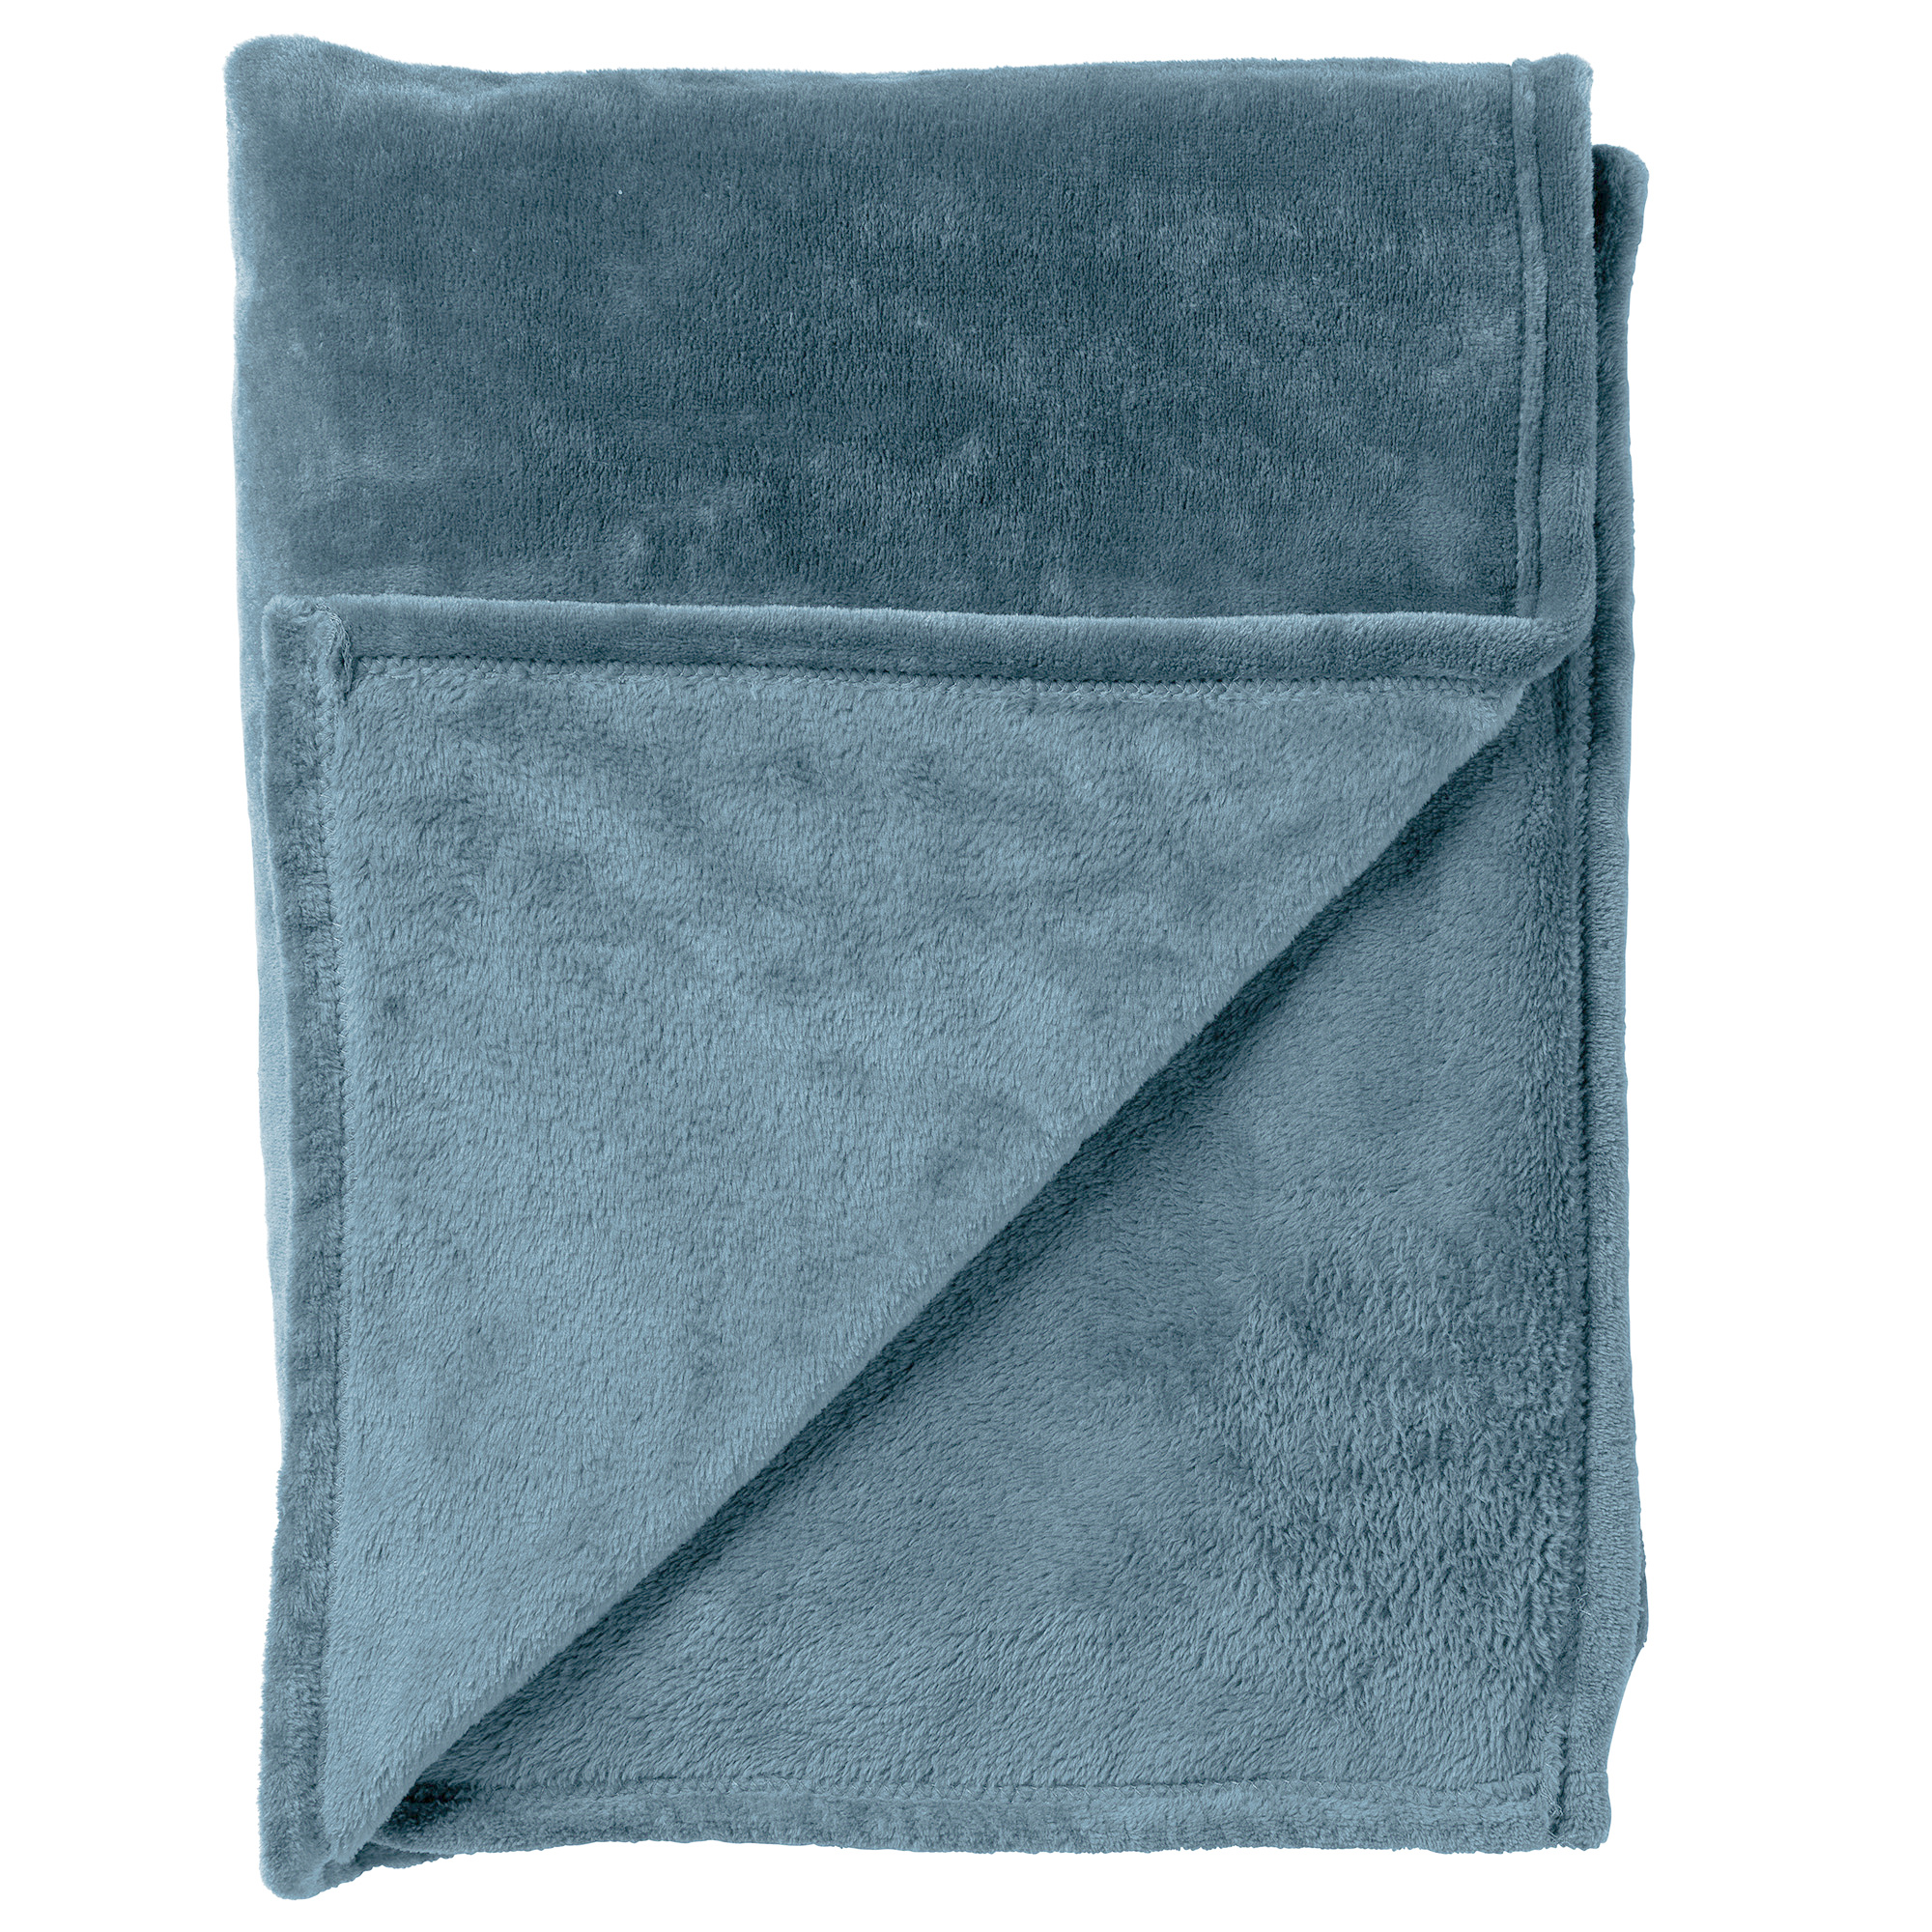 BILLY - Plaid flannel fleece 150x200 cm - Provincial Blue - blauw - superzacht